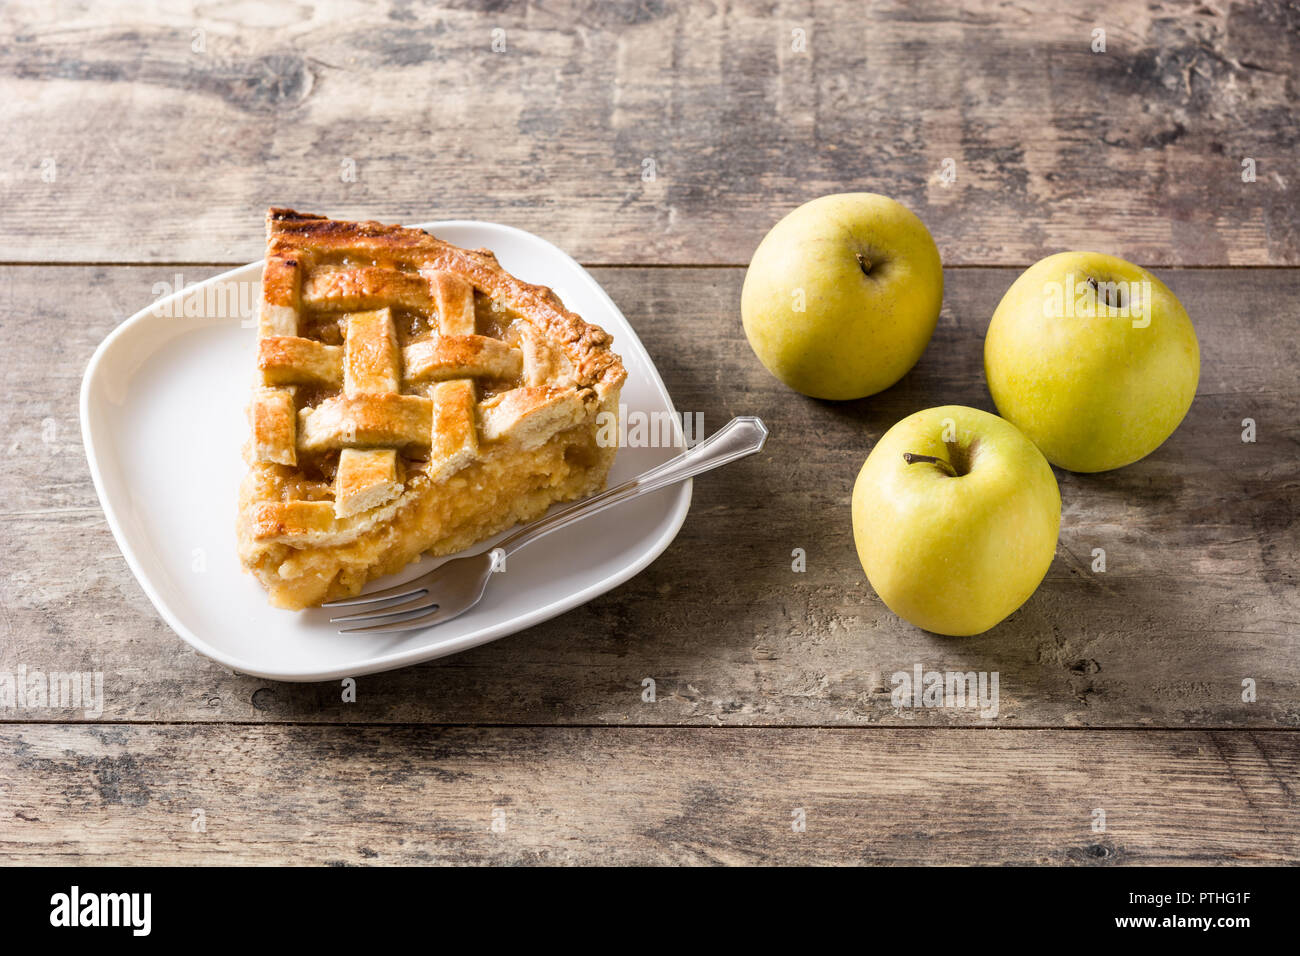 Homemade apple pie slice on wooden table Stock Photo